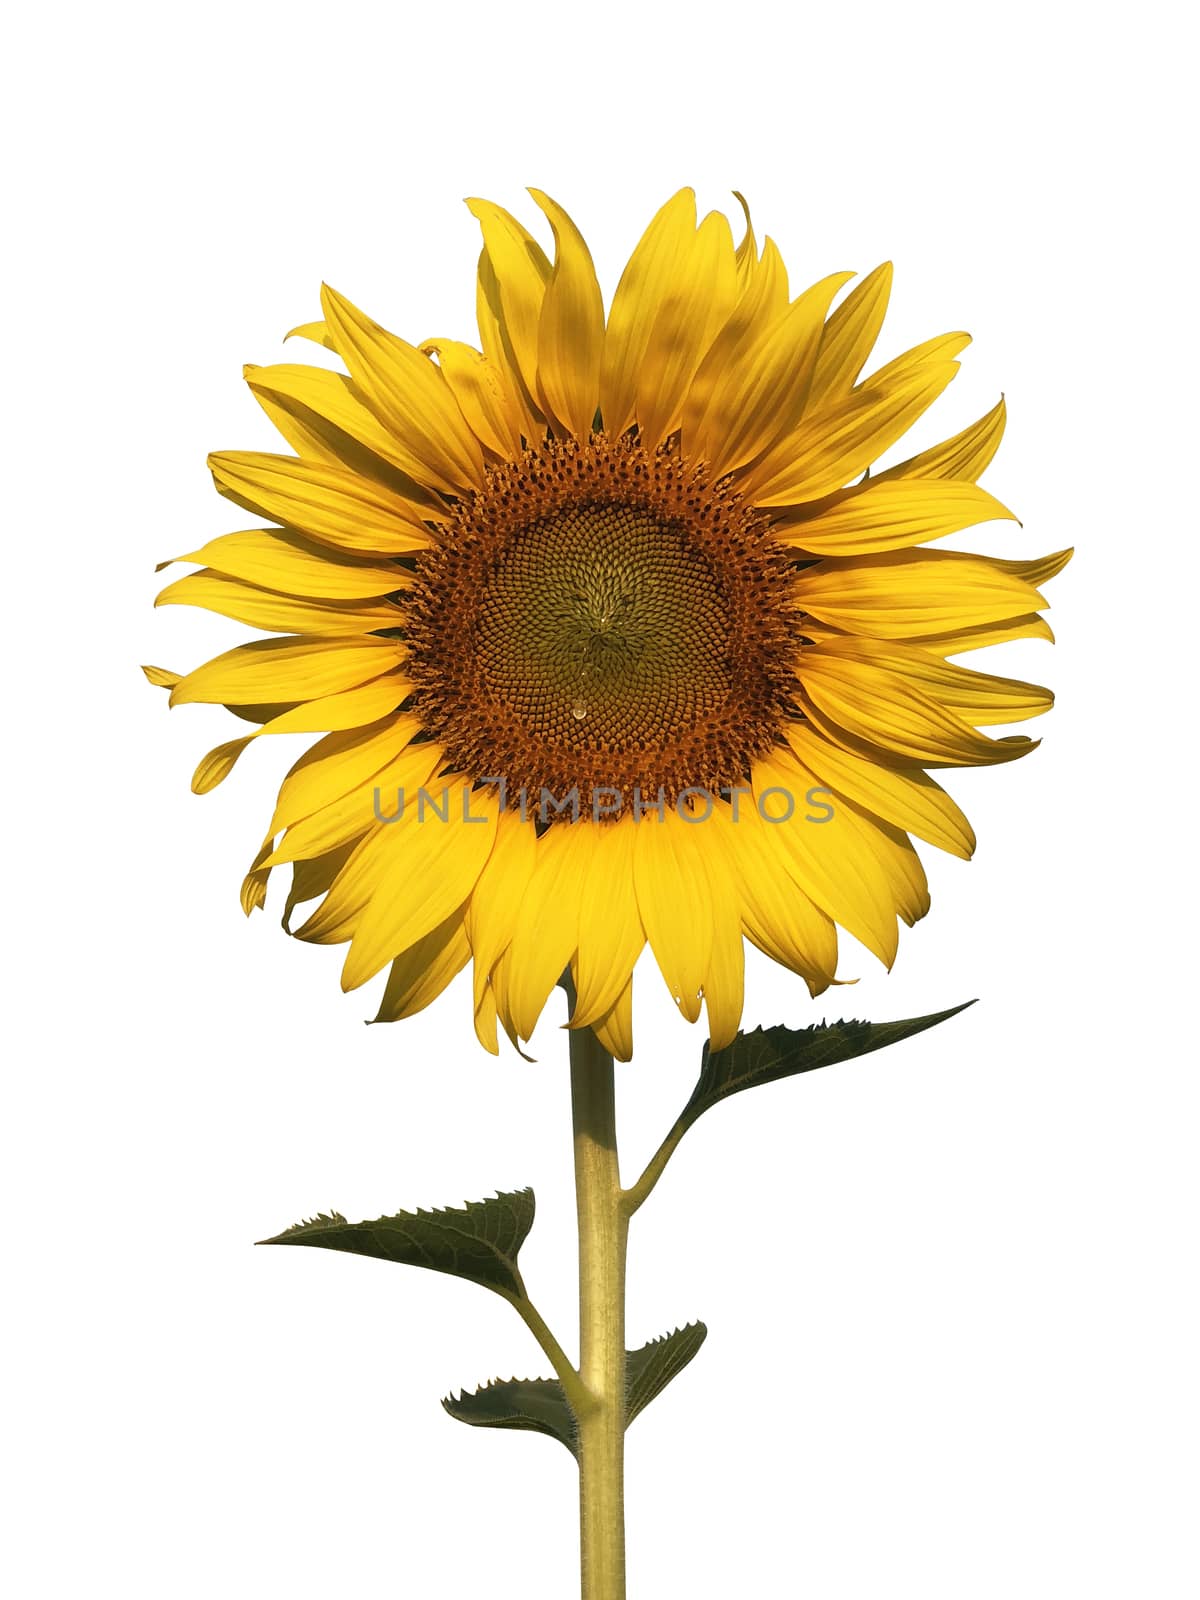 Big sunflower on white background